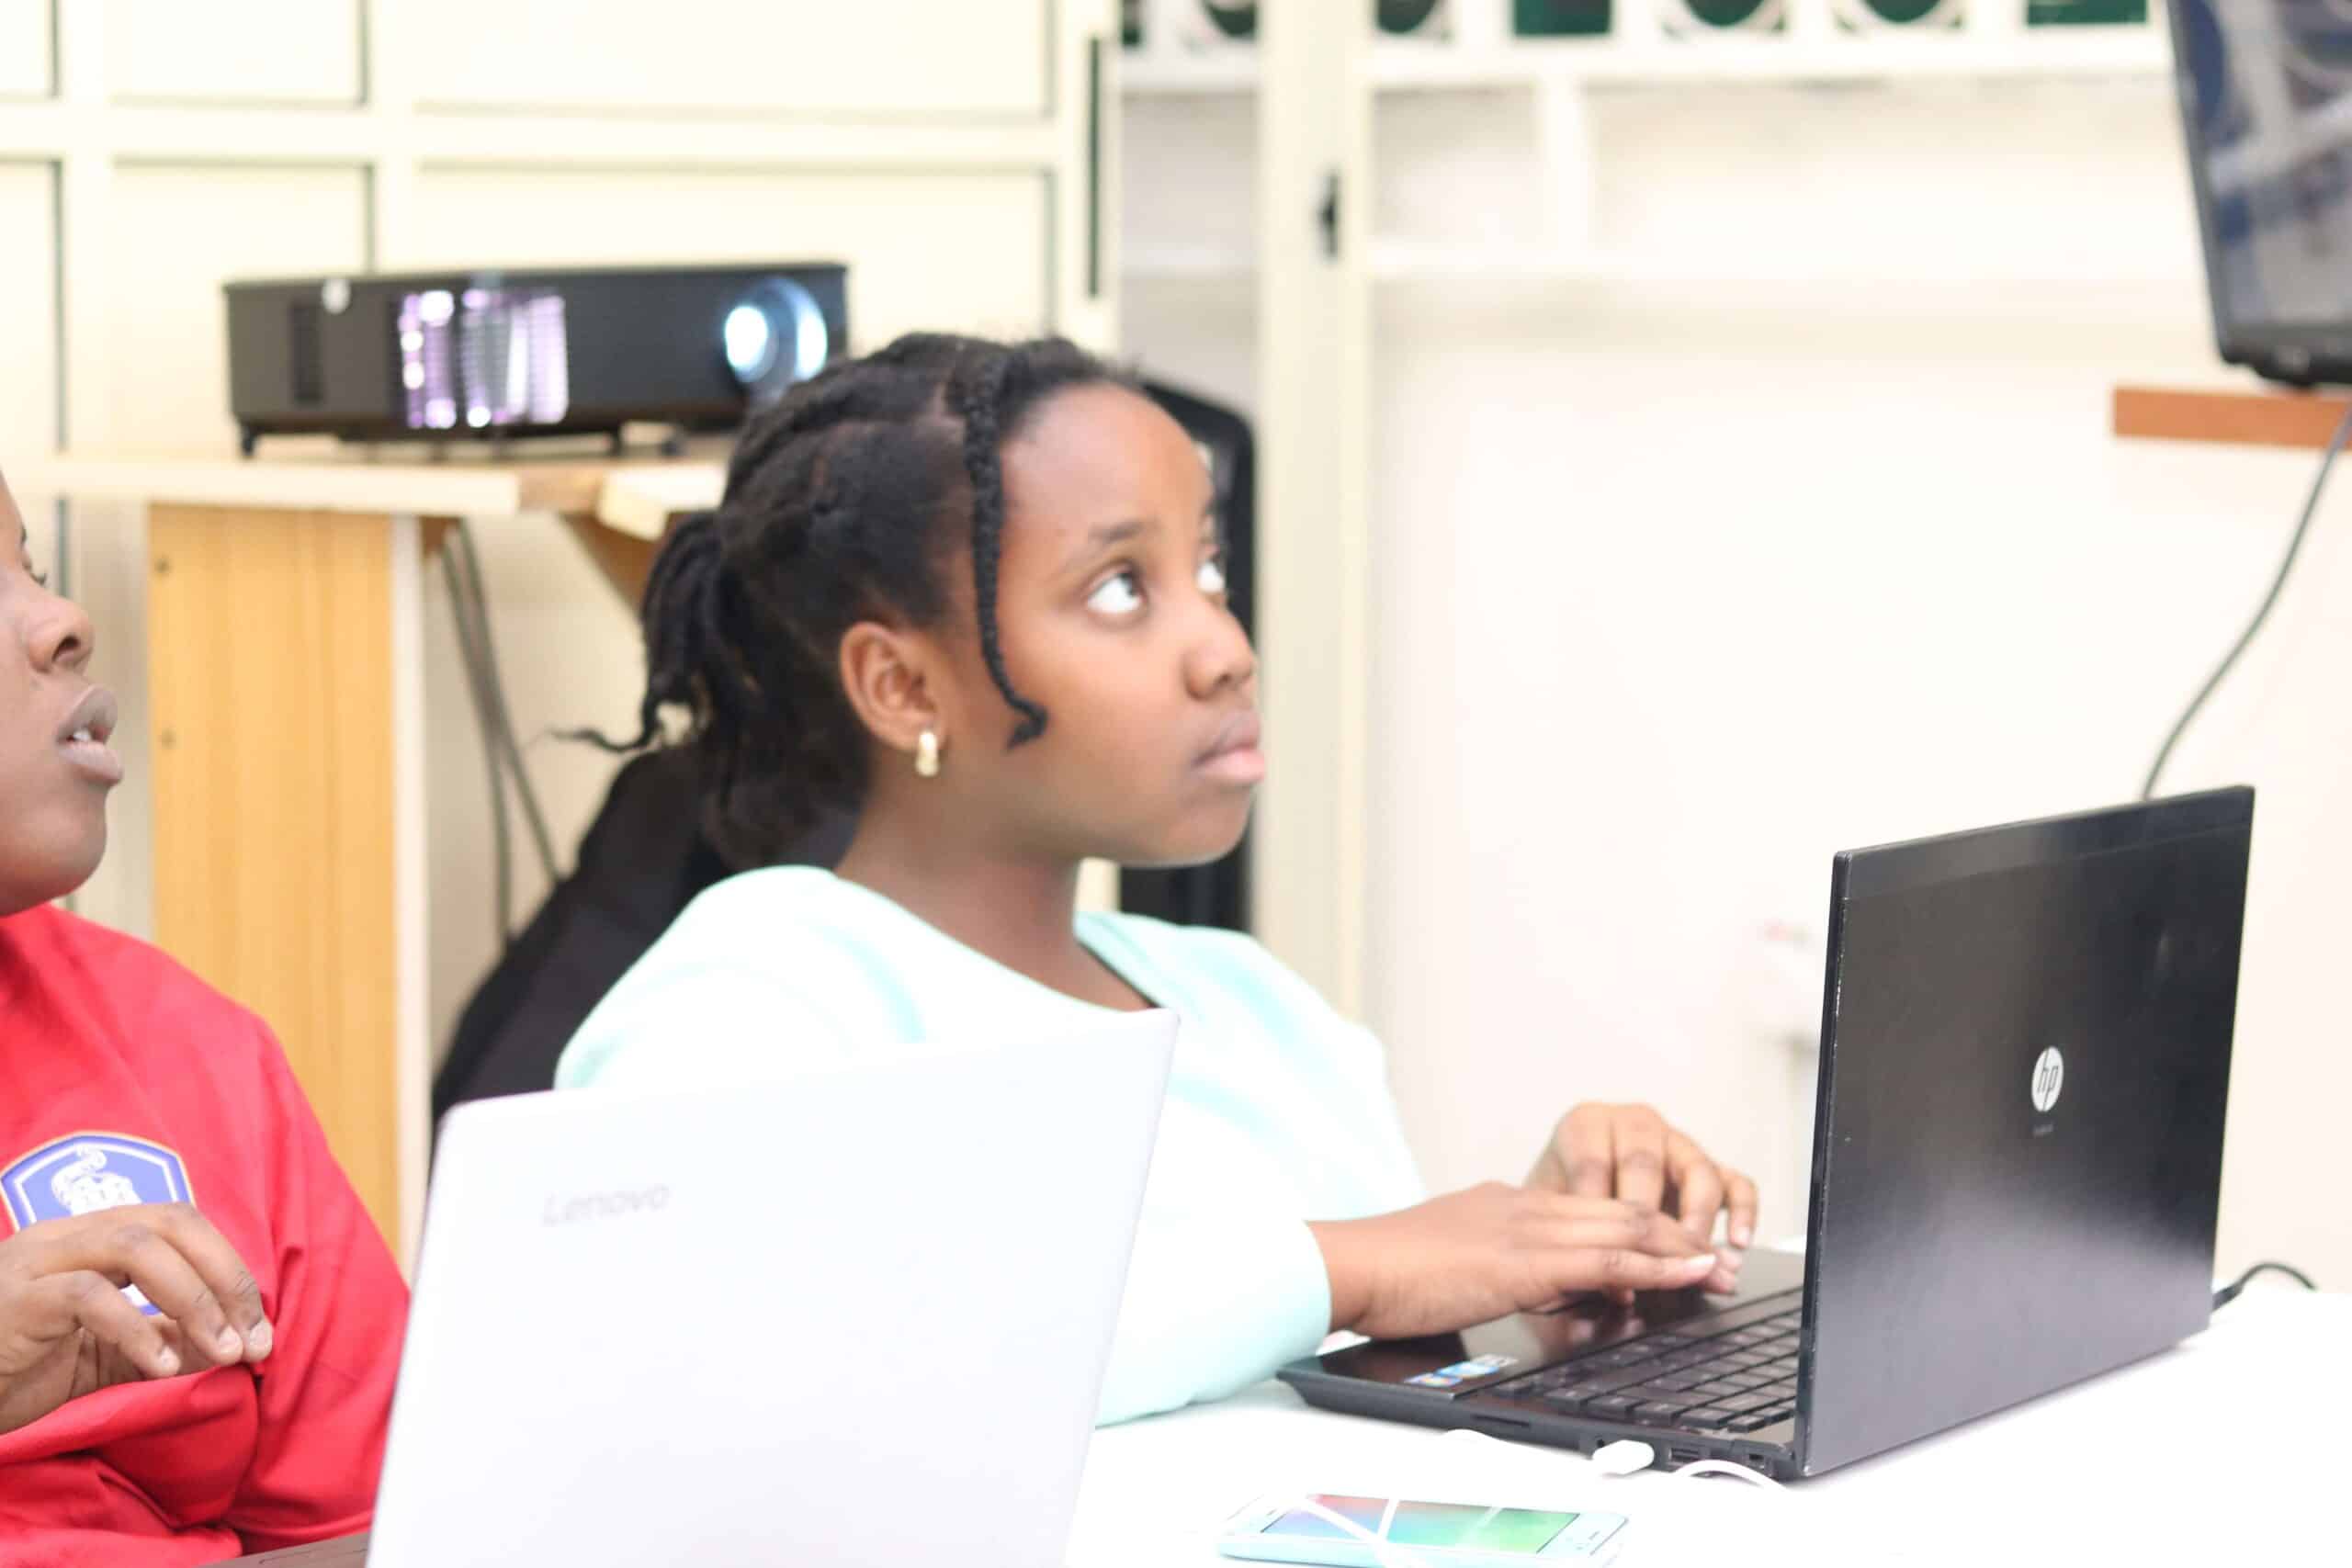 9jacodekids teenage girl coding in Port Harcourt, Nigeria